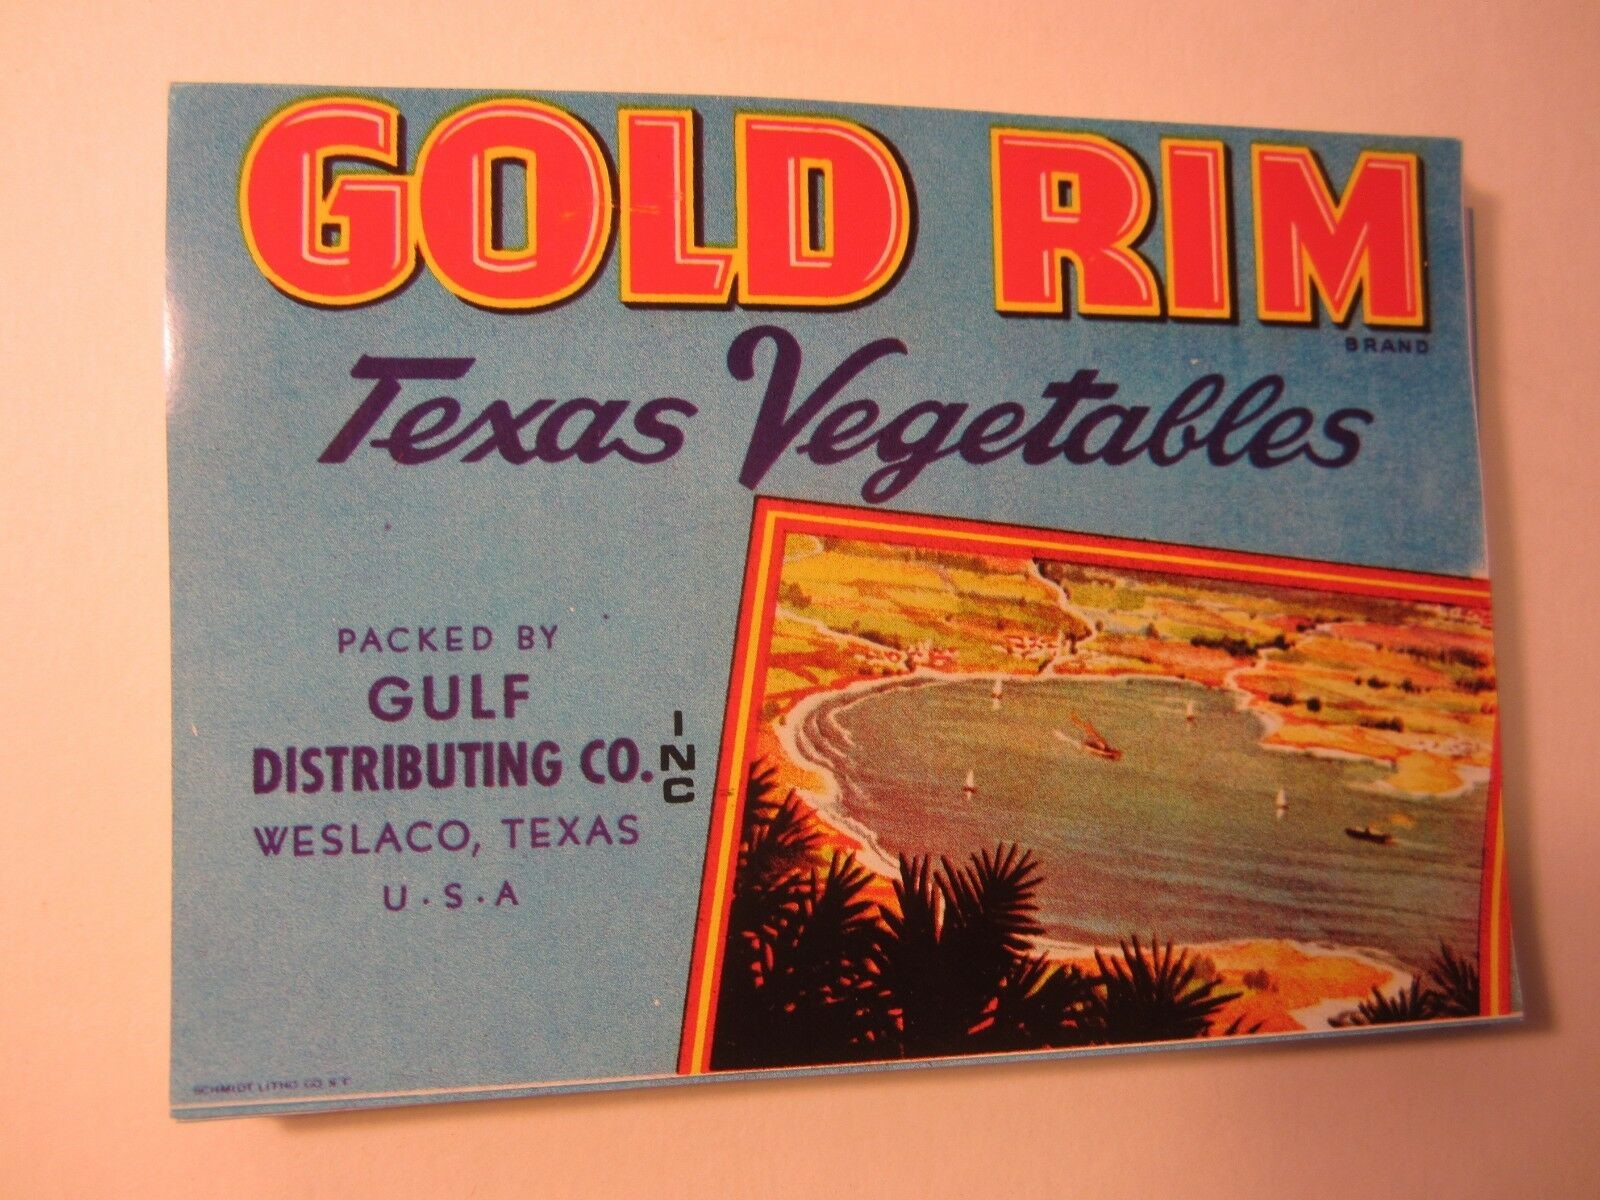  Lot of 100 Old Vintage - GOLD RIM Texas Vegeta...